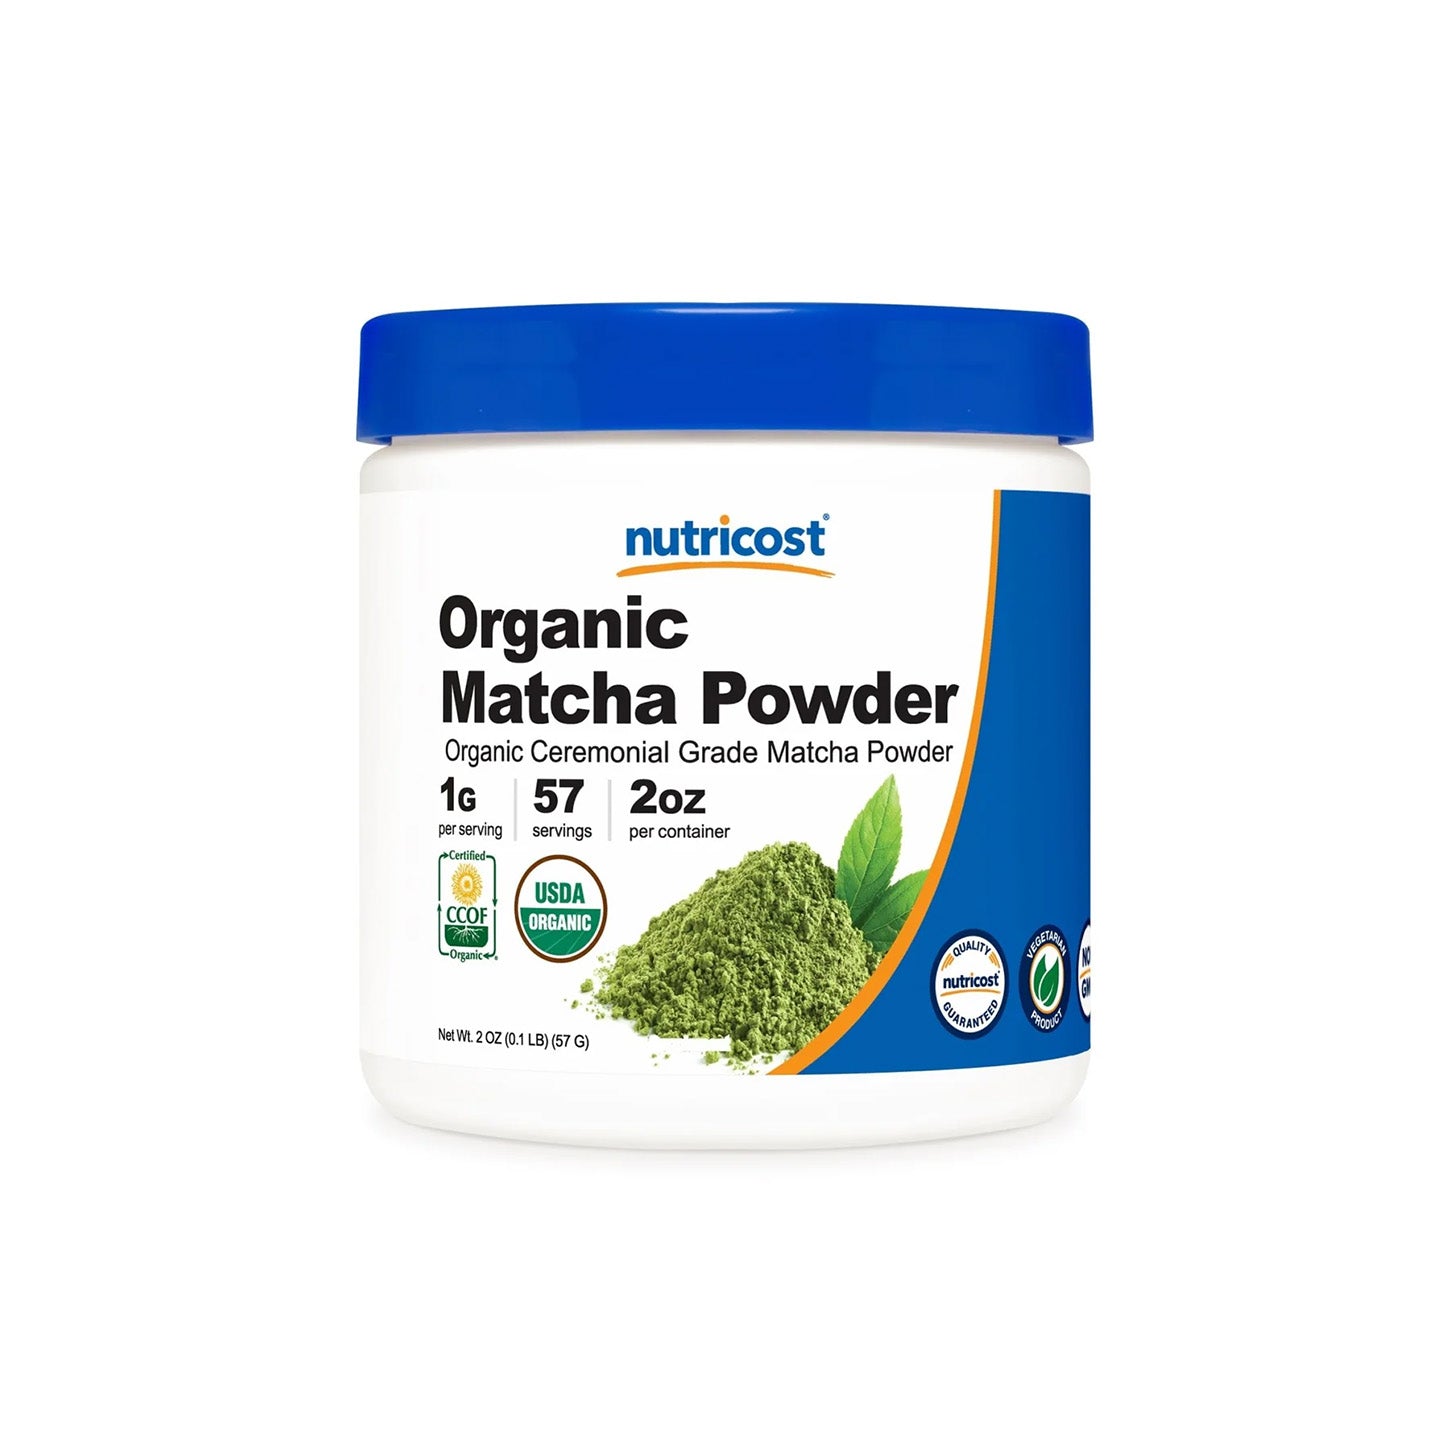 Nutricost Polvo de Matcha: Potencia tu Día con Energía Rica en Antioxidantes | ProHealth Shop [Panamá]